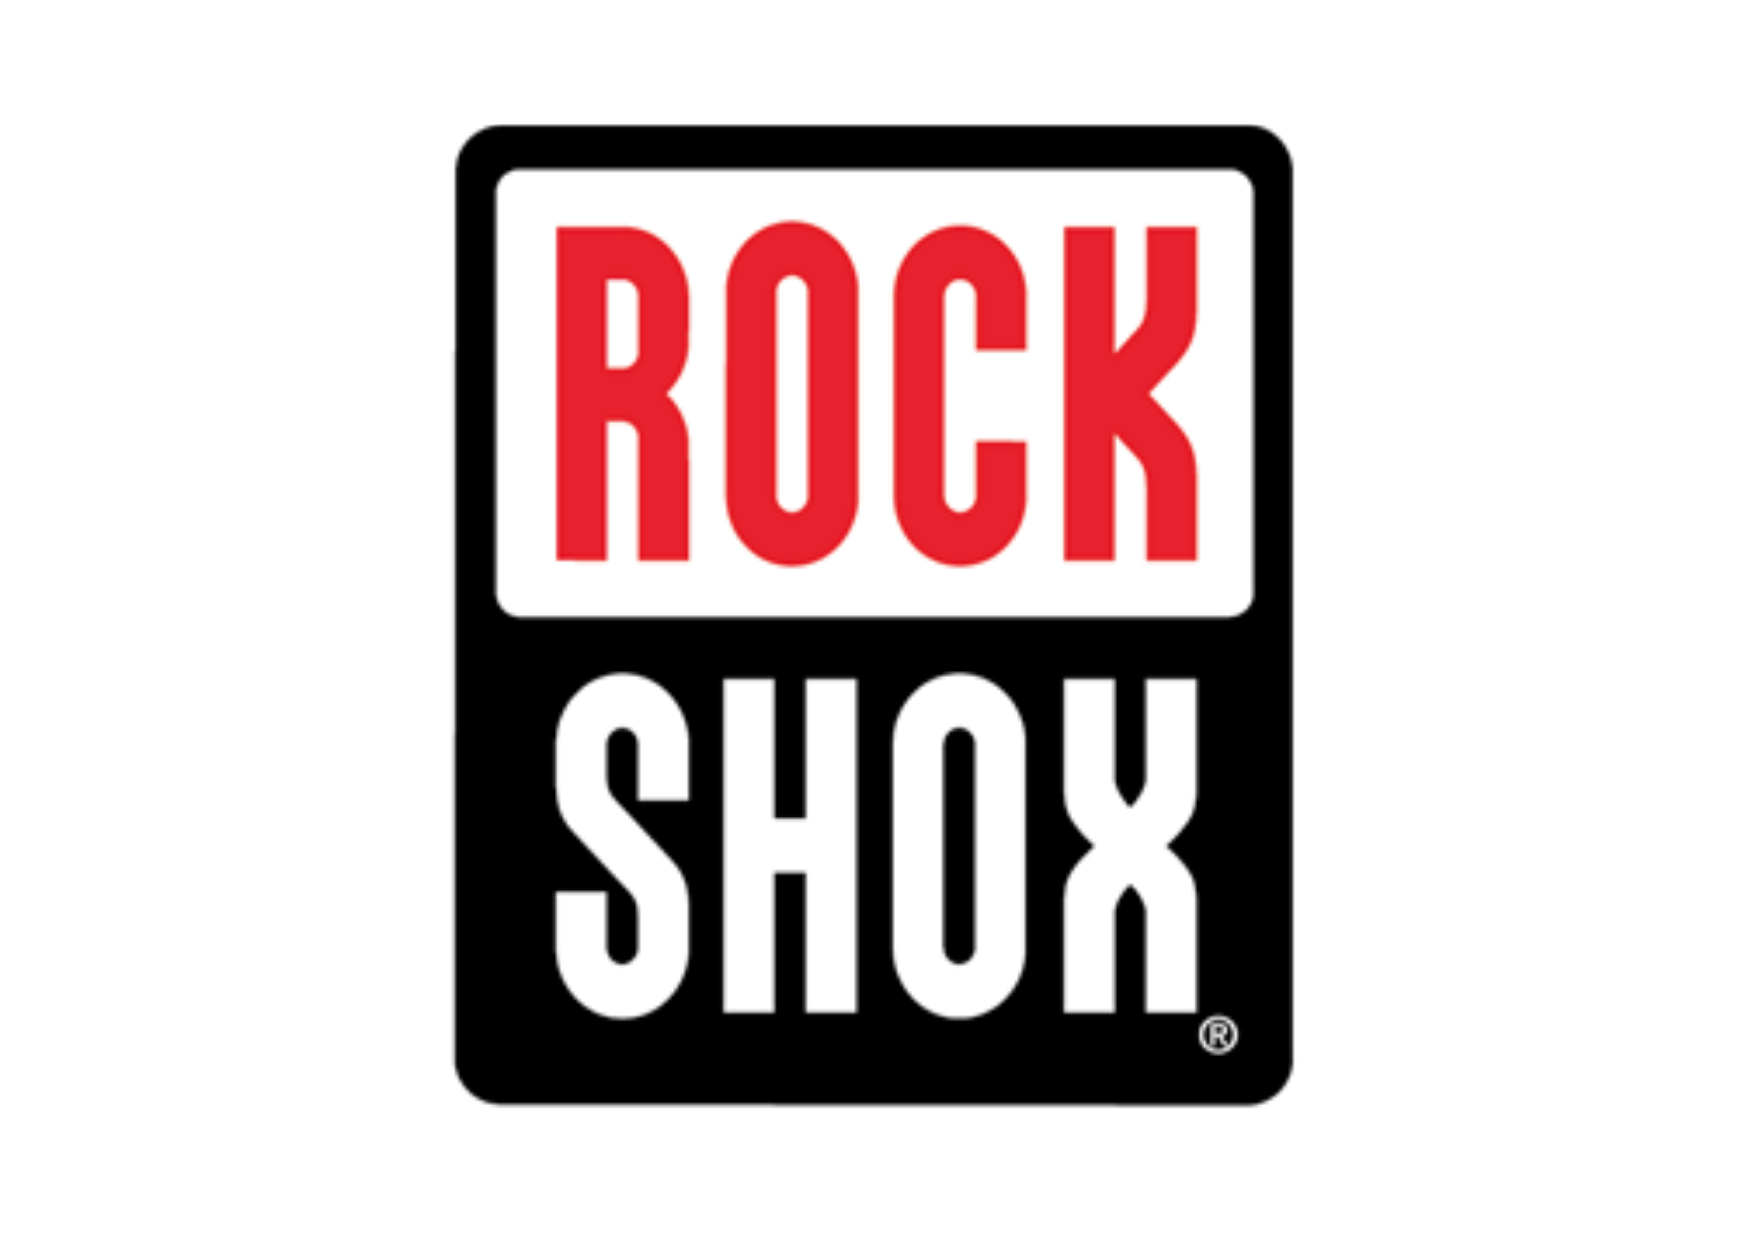 Rock shox